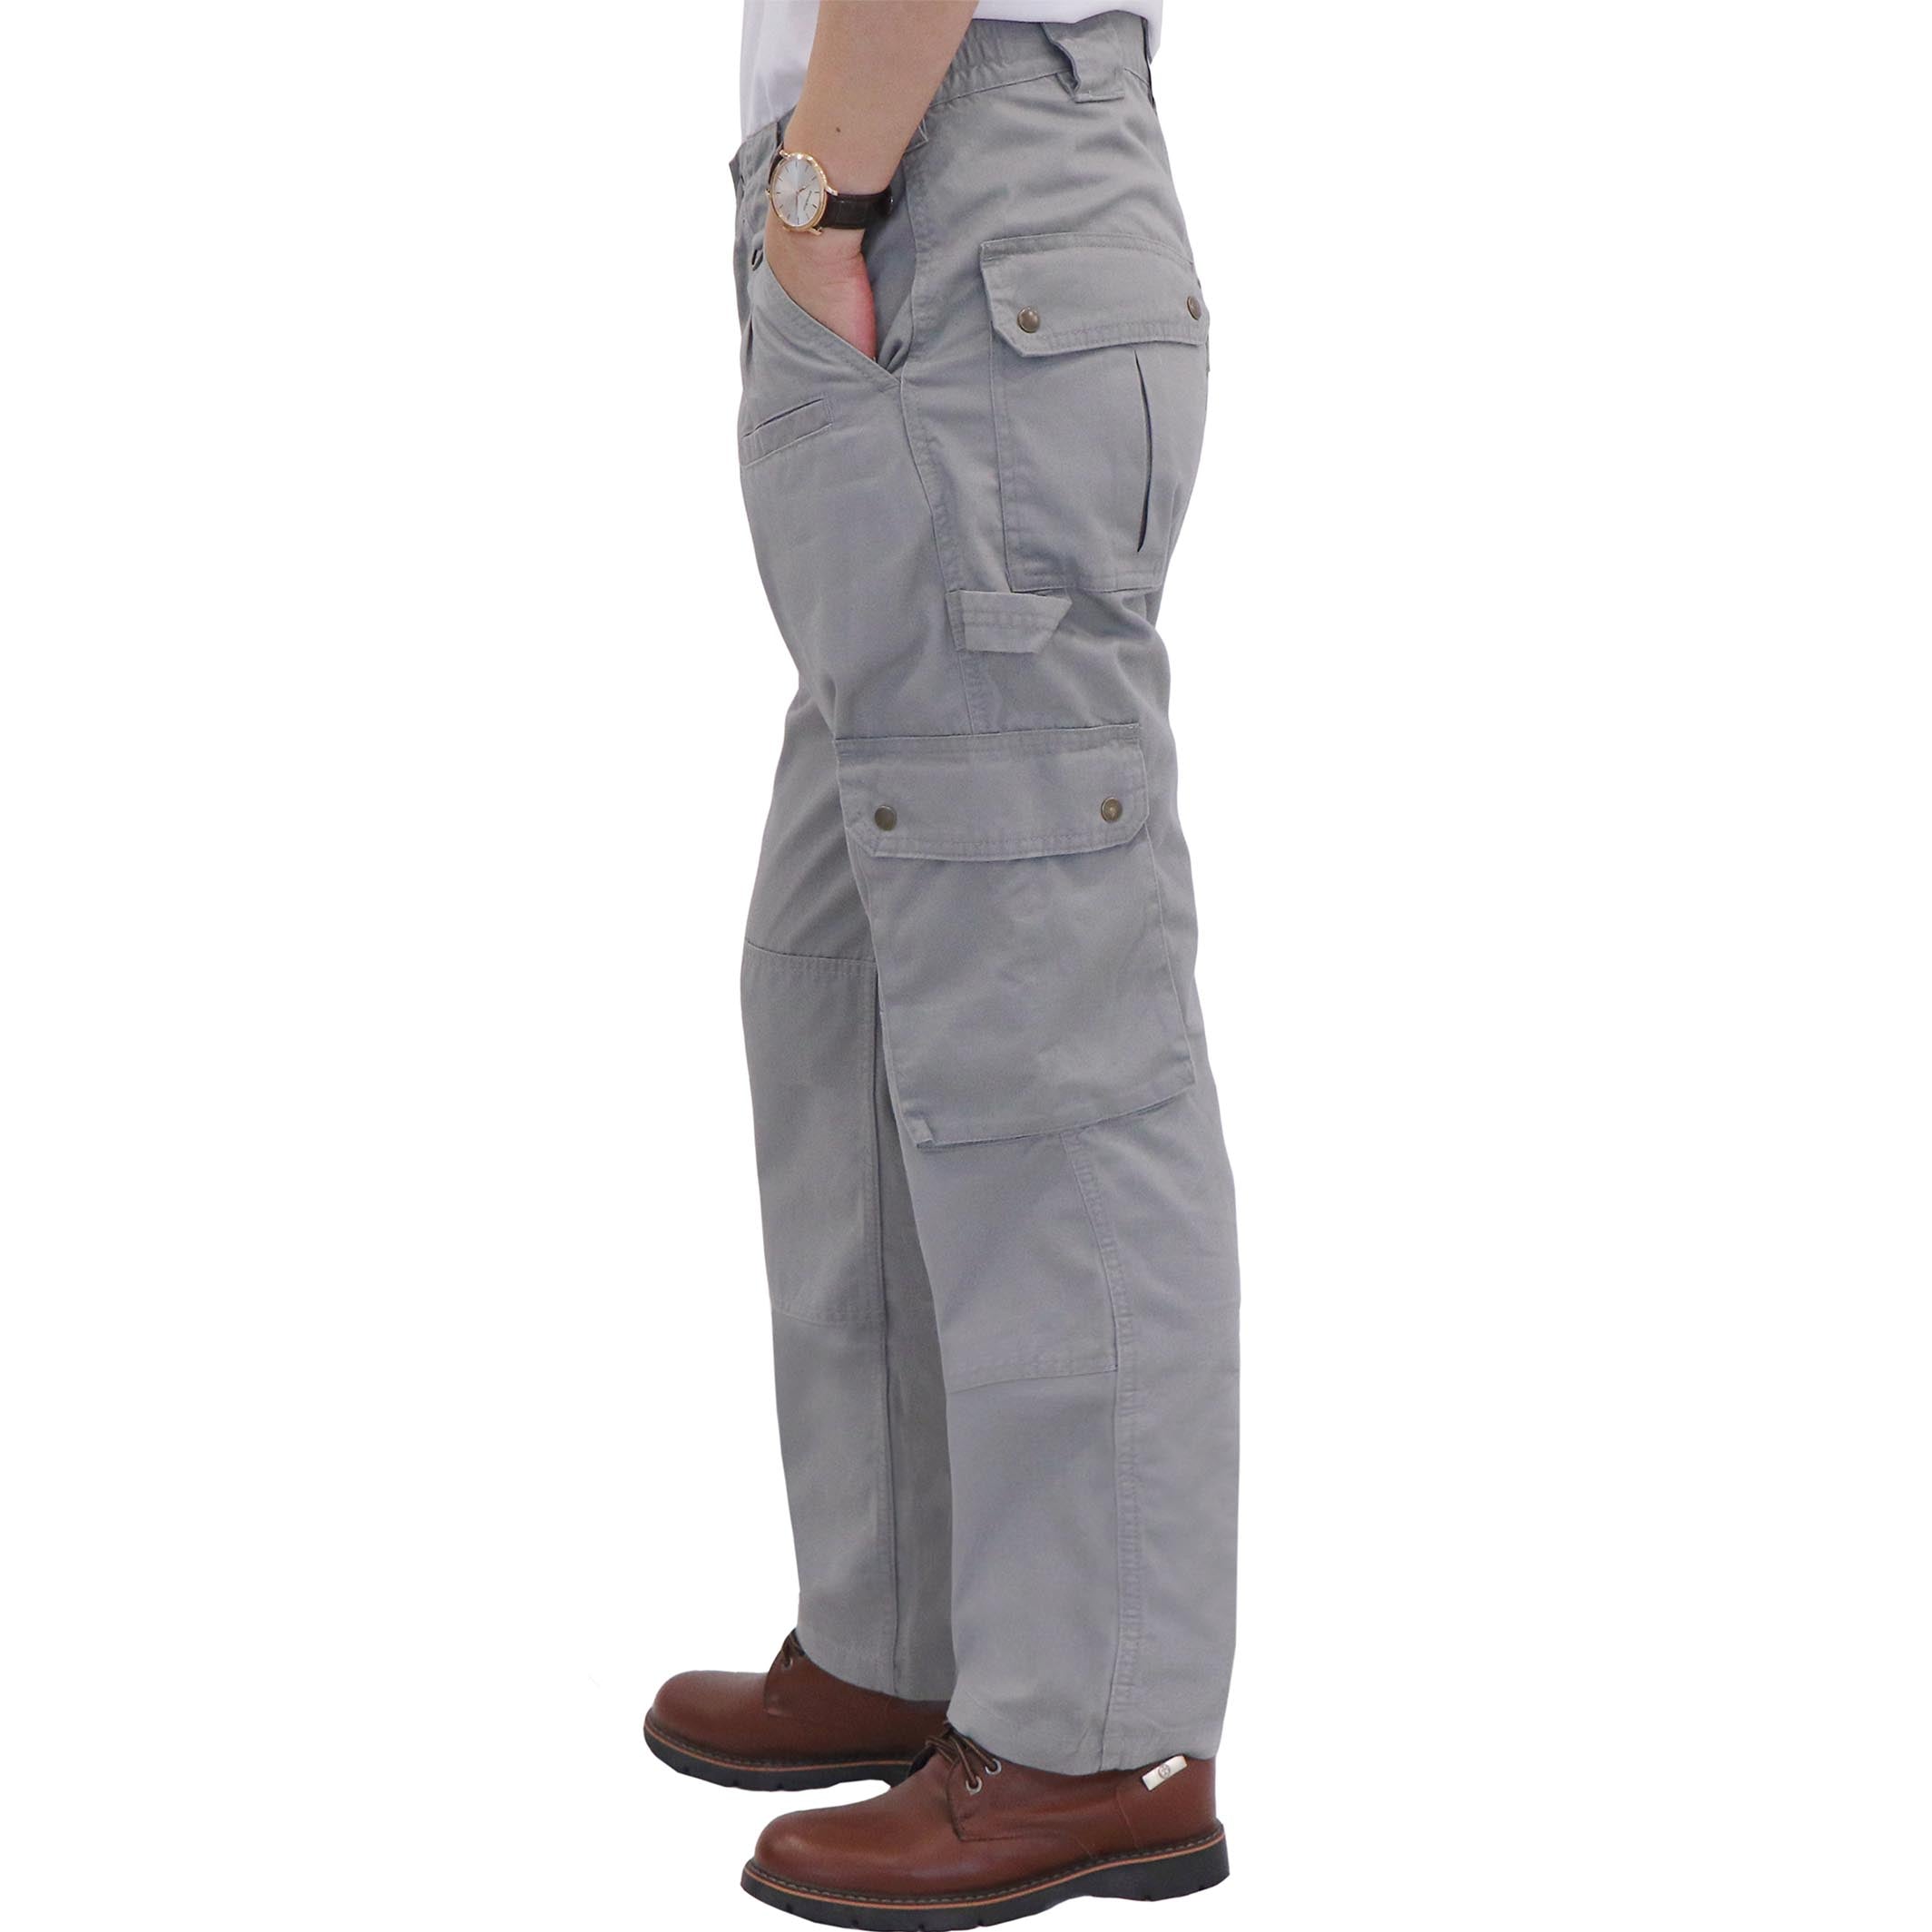 Review of Bocomal FR Mens Cargo Pants